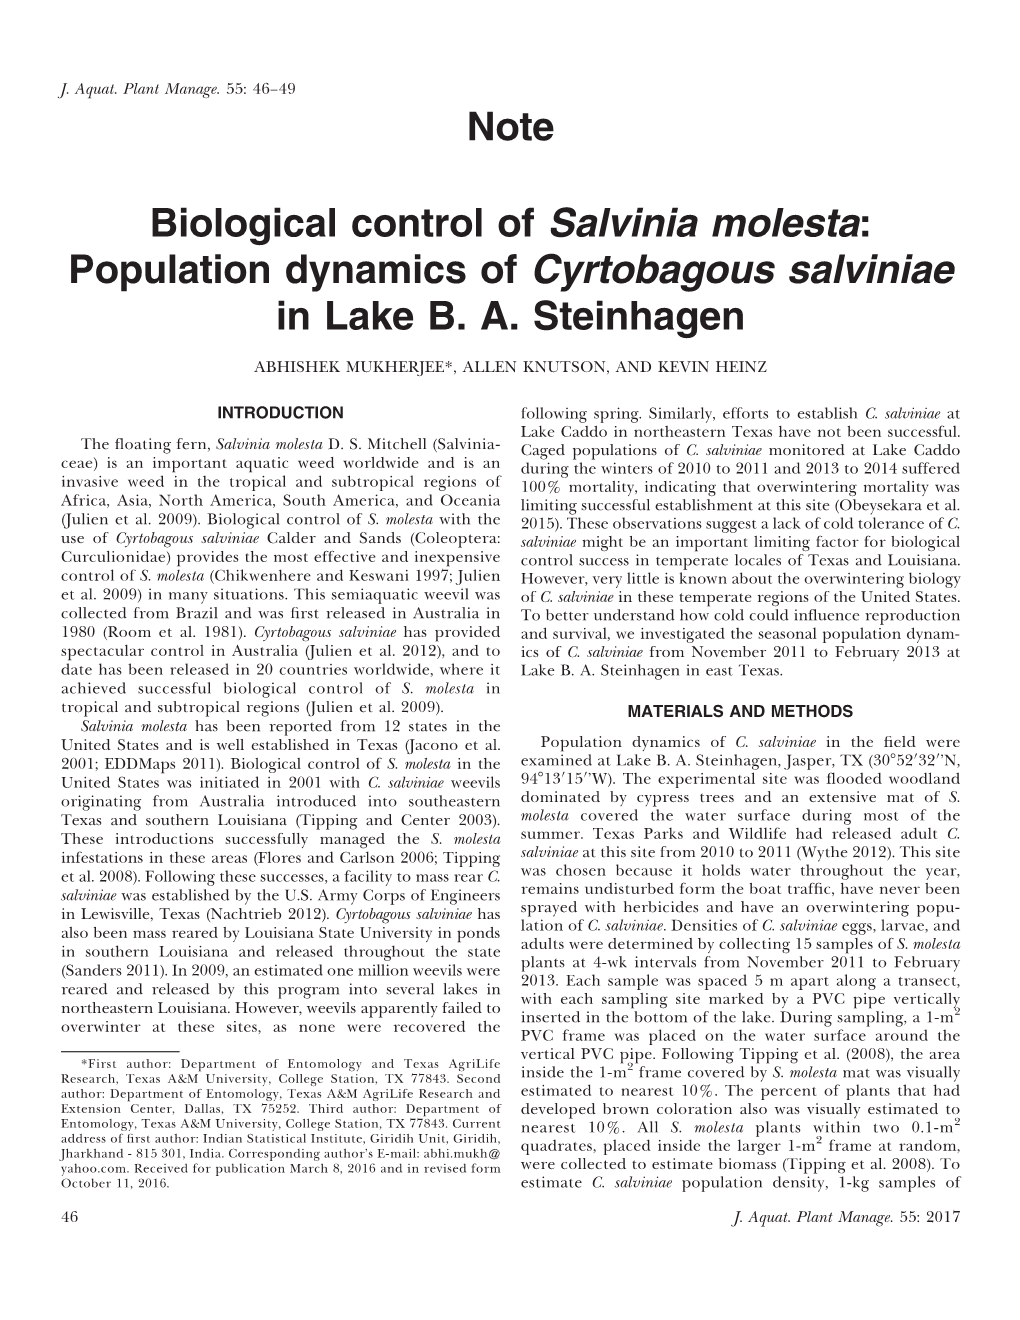 Note Biological Control of Salvinia Molesta: Population Dynamics Of